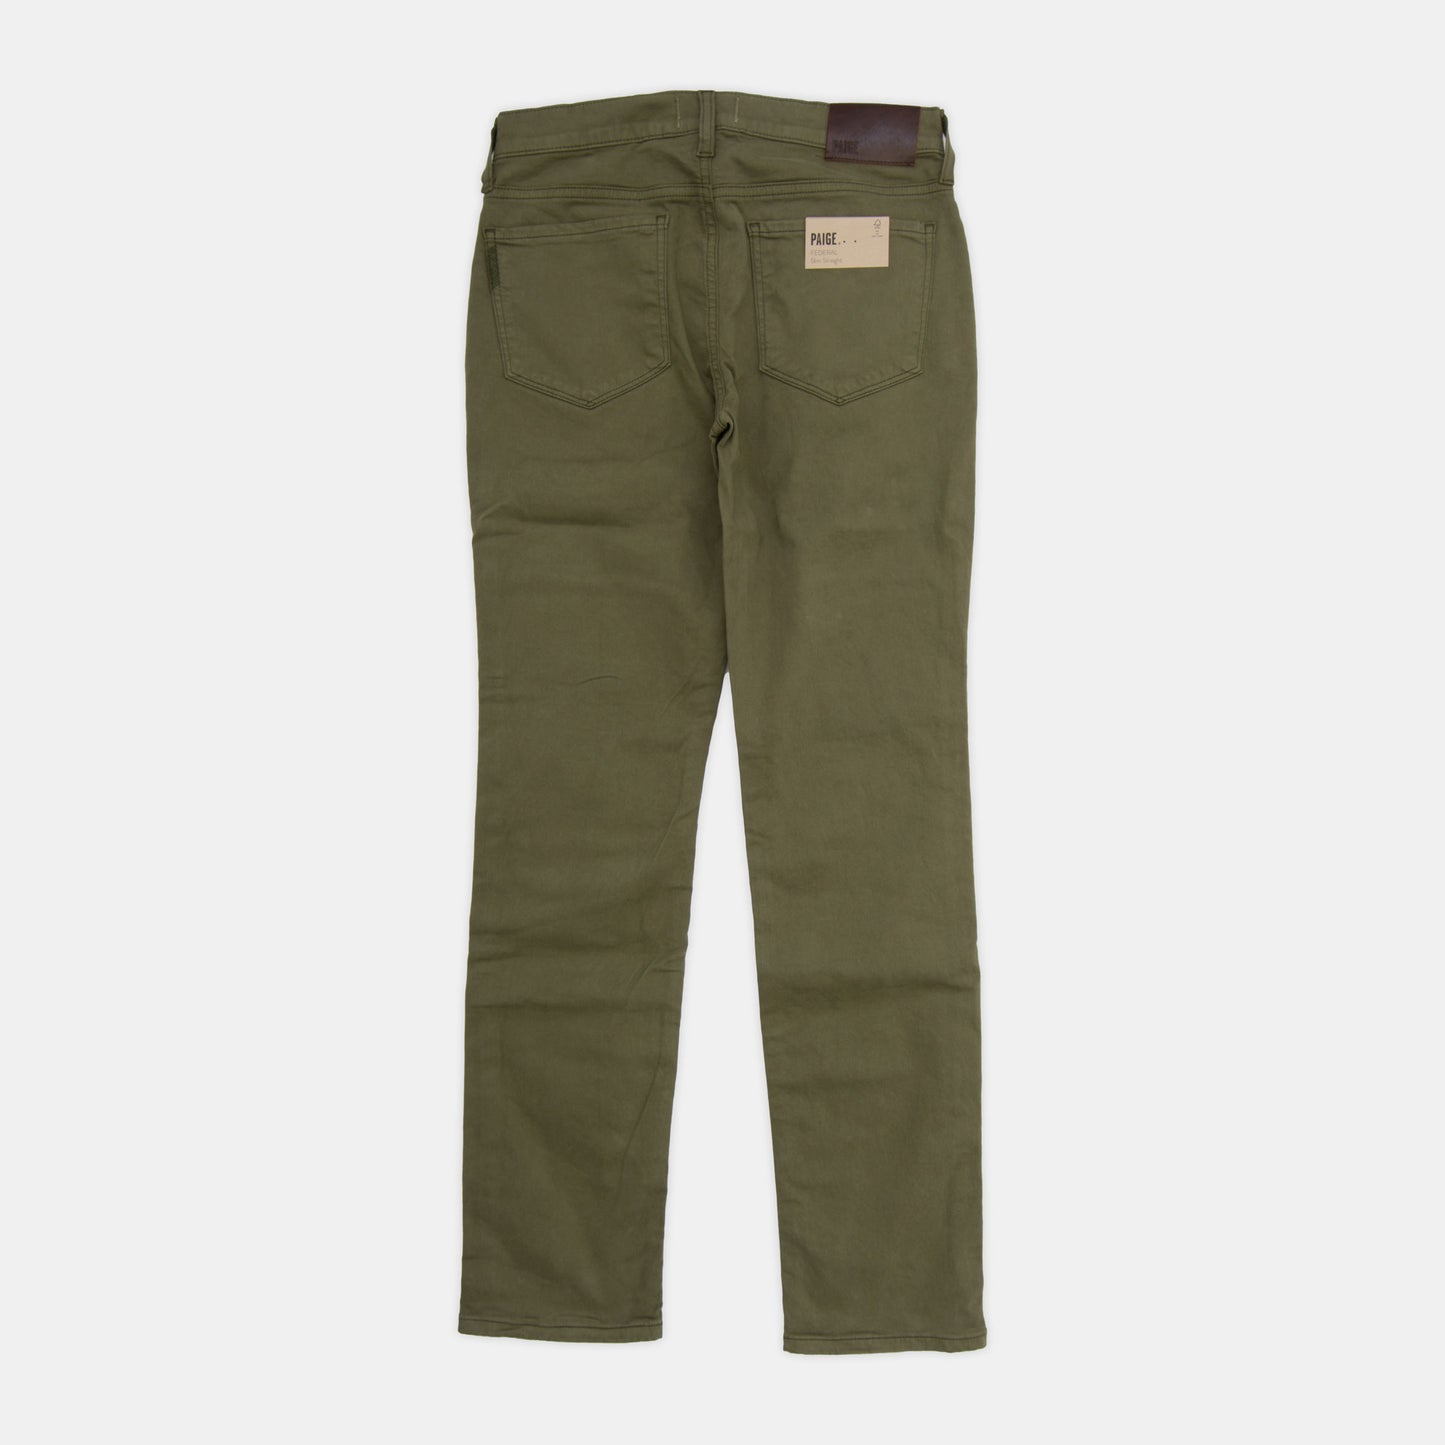 Paige - Federal Slim Straight Eco-Evolution 5-Pocket Pant in Uniform Green